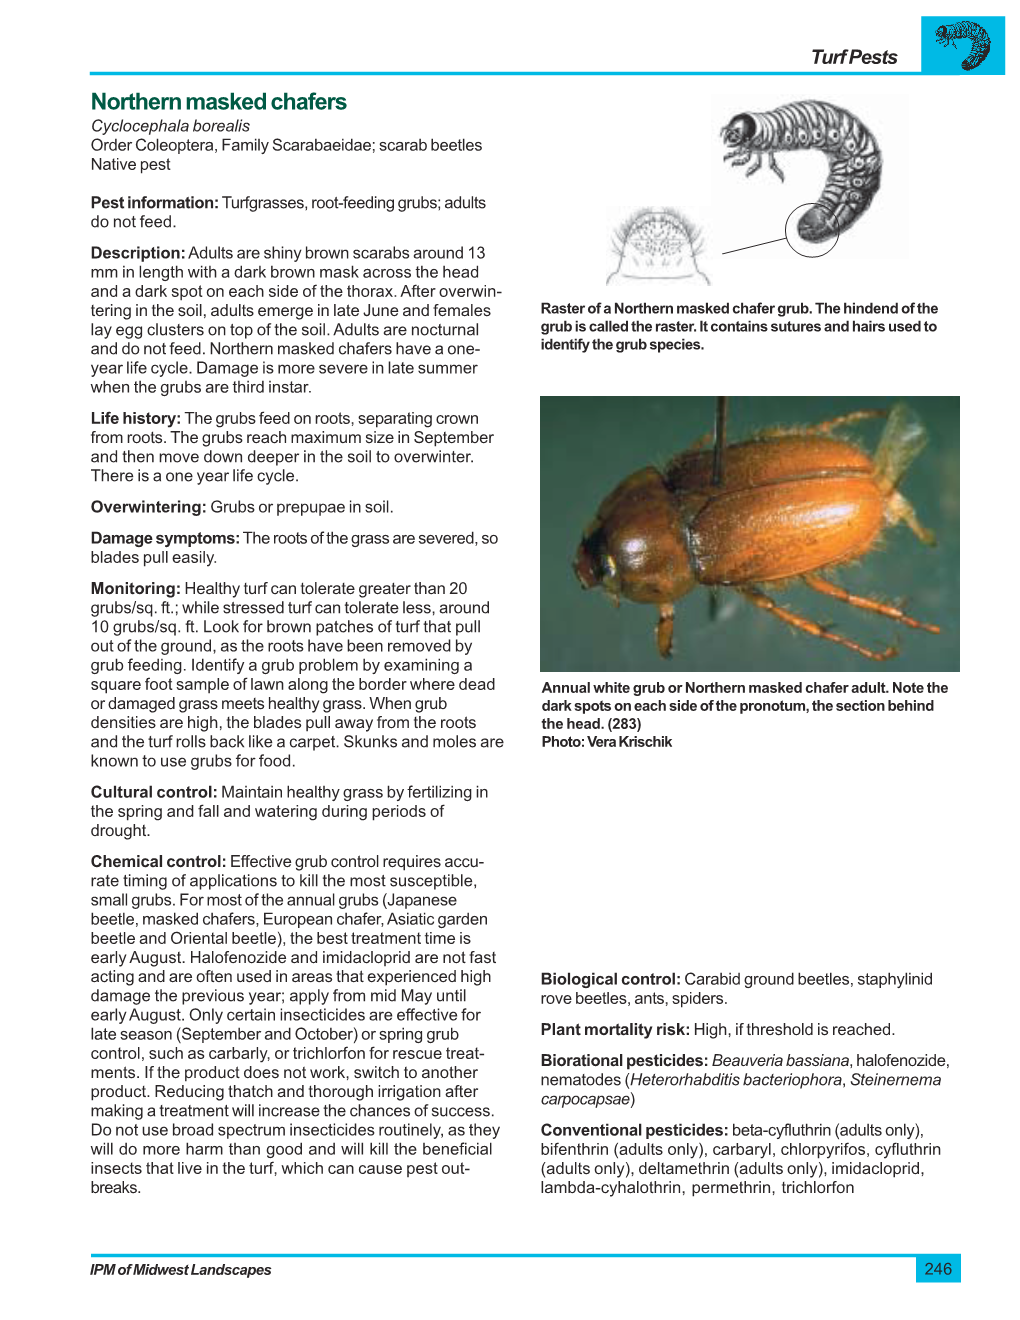 Northern Masked Chafers Cyclocephala Borealis Order Coleoptera, Family Scarabaeidae; Scarab Beetles Native Pest